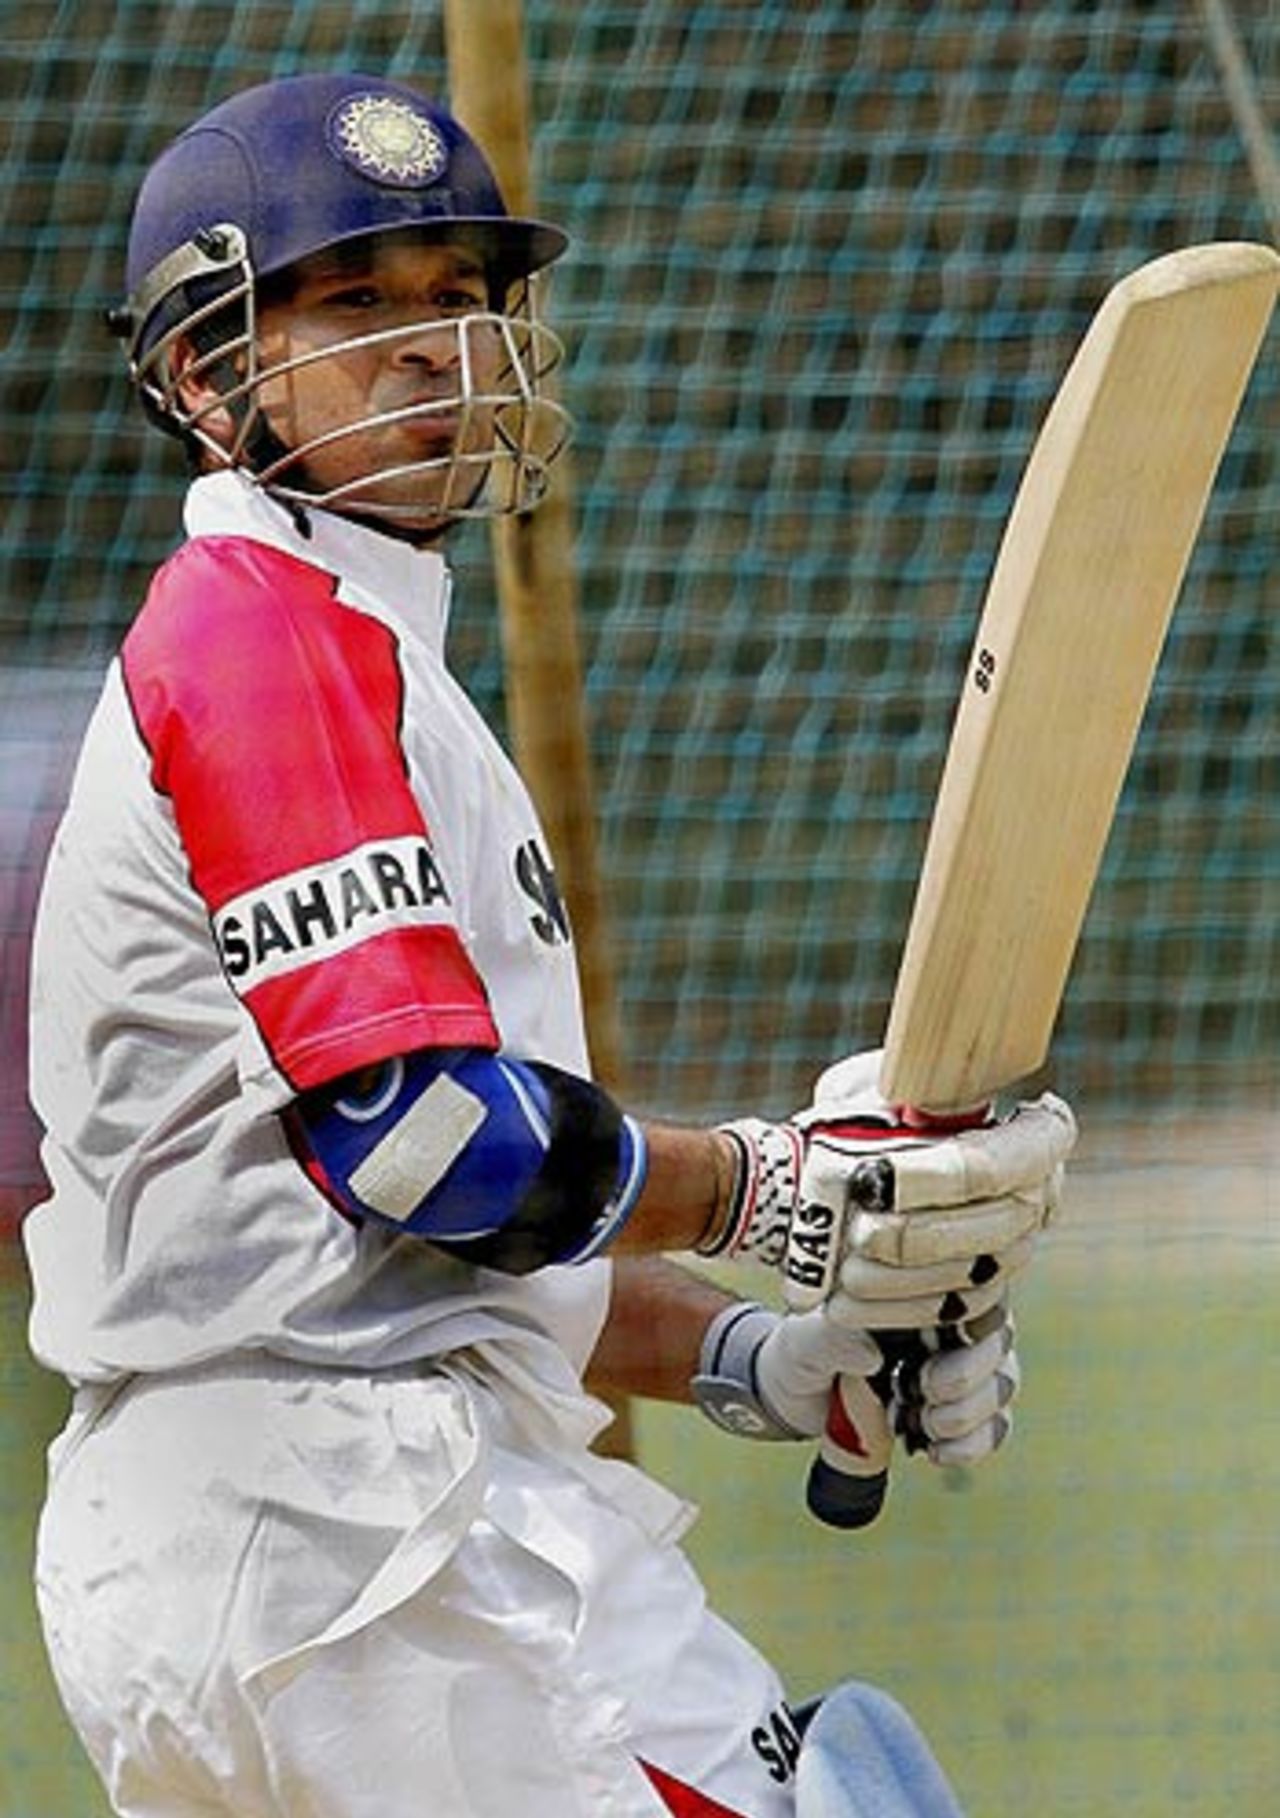 Sachin Tendulkar bats during practice ahead of the fourth ODI against Sri Lanka, Nehru Stadium, Pune, November 2, 2005